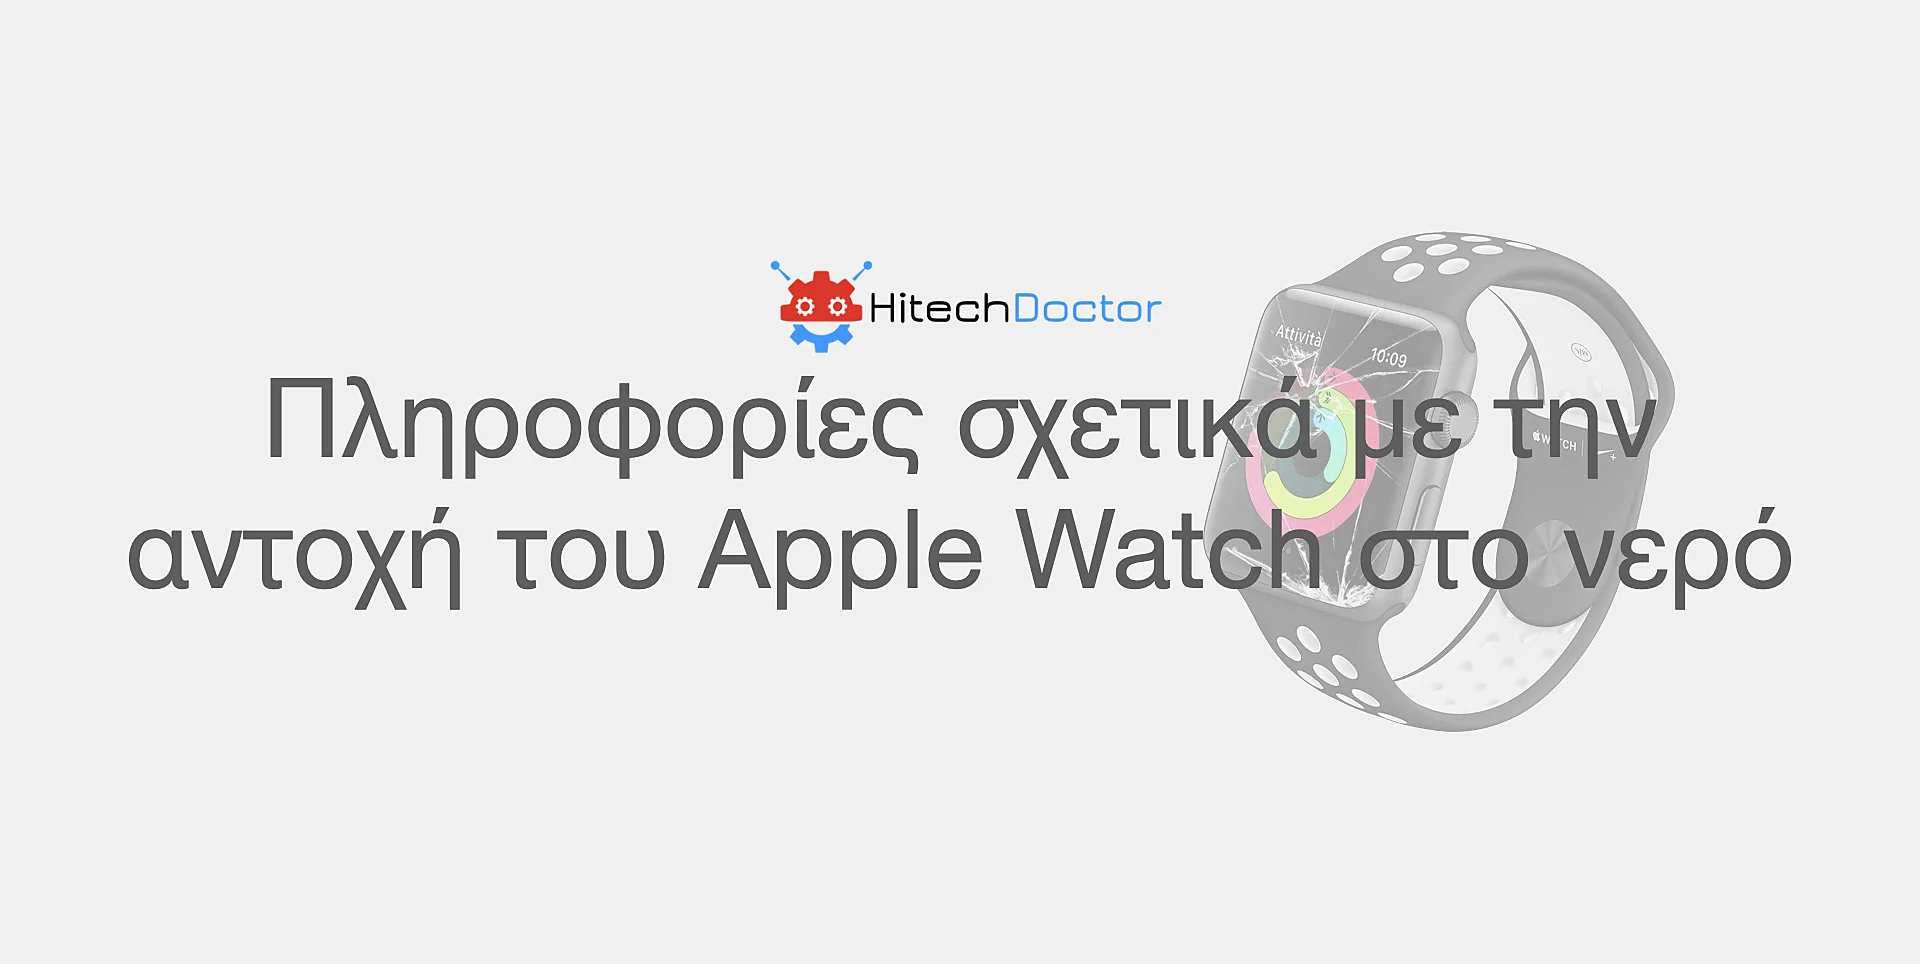 HitechDoctor.com Πληροφορίες σχετικά με την αντοχή του Apple Watch στο νερό